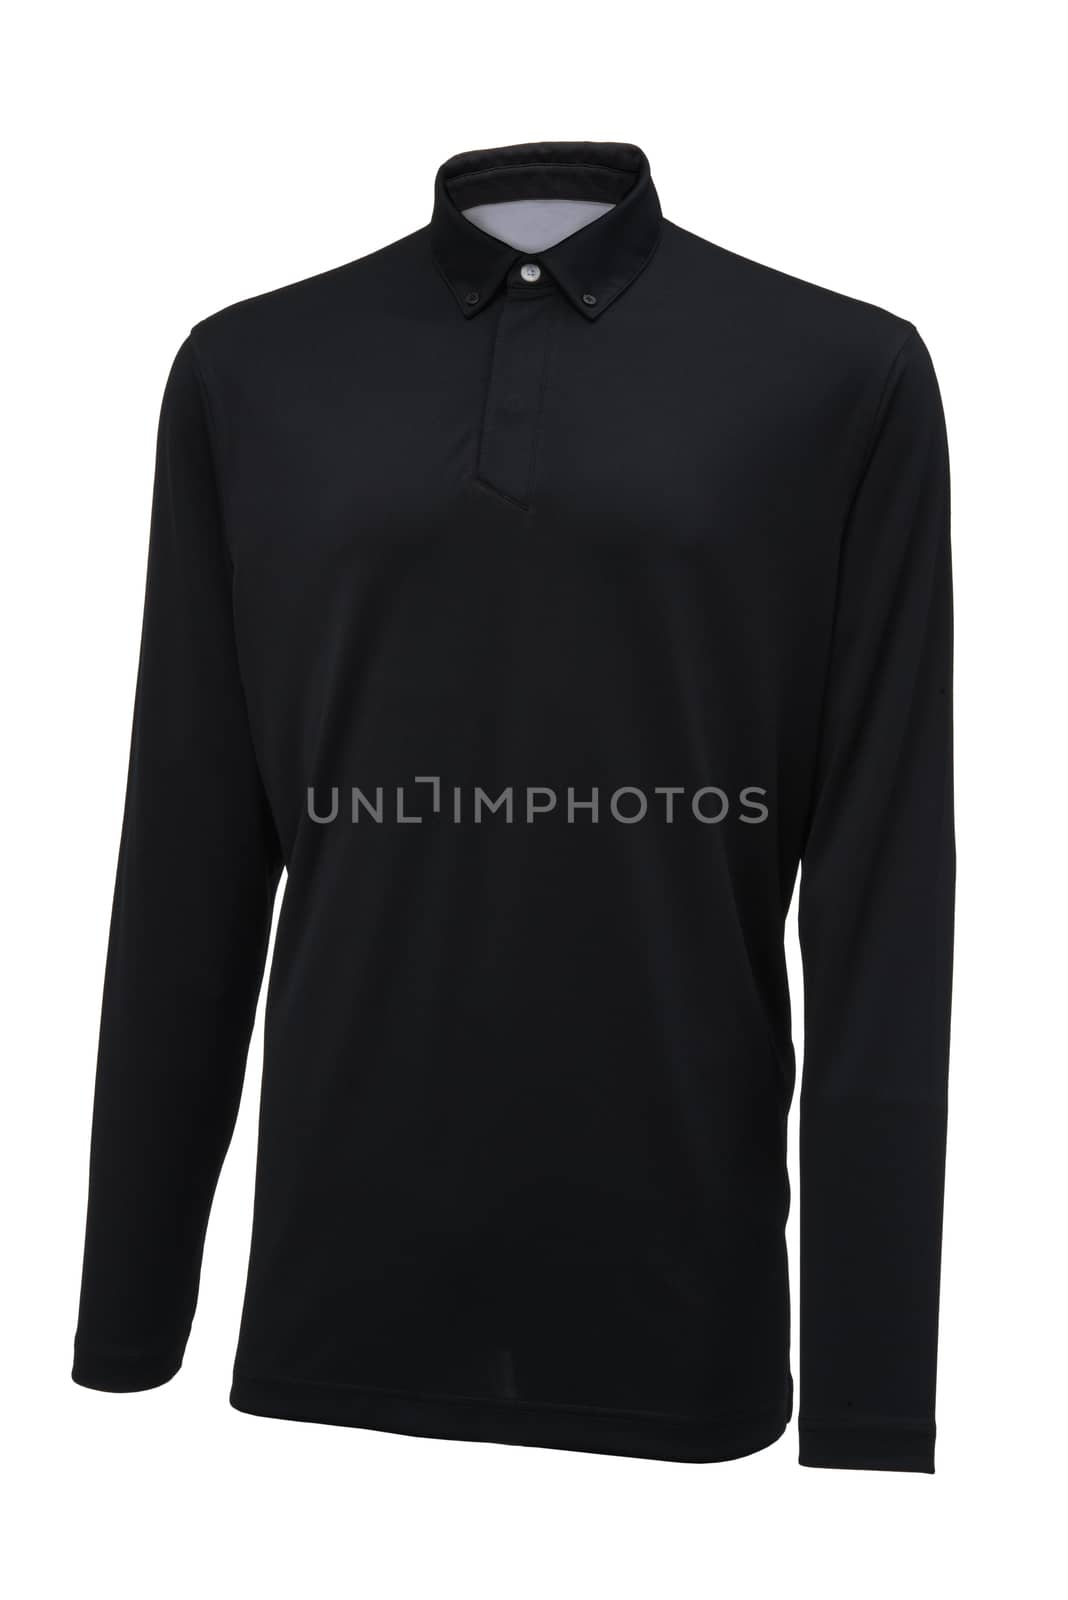 Golf long sleeve black sport shirt isolated on white background